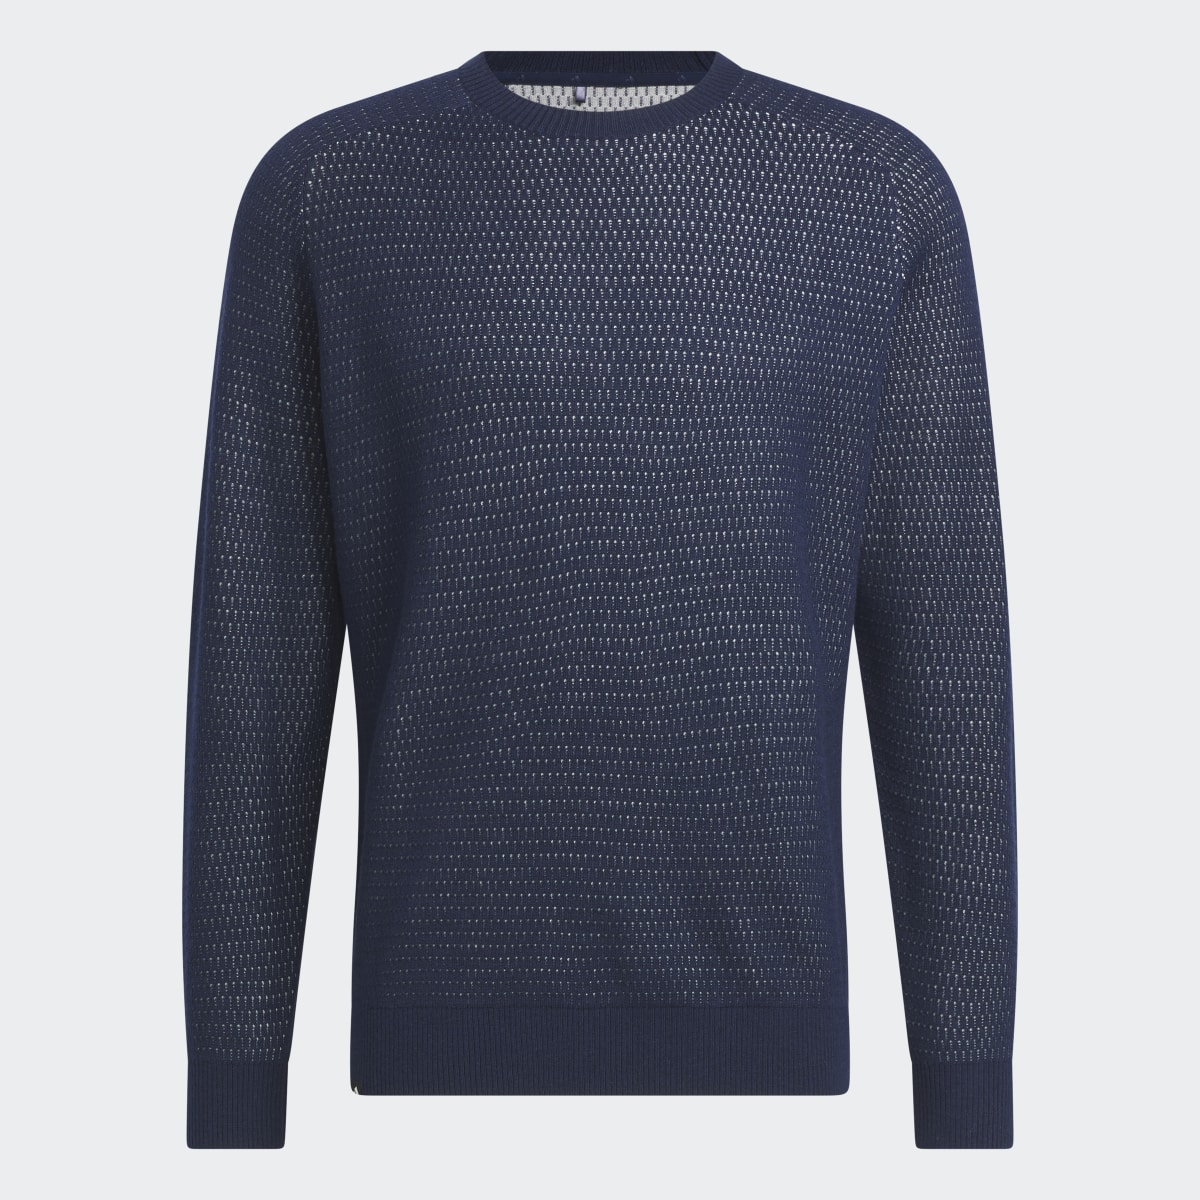 Adidas Ultimate365 Tour Flat-Knit Crew Golf Sweatshirt. 6